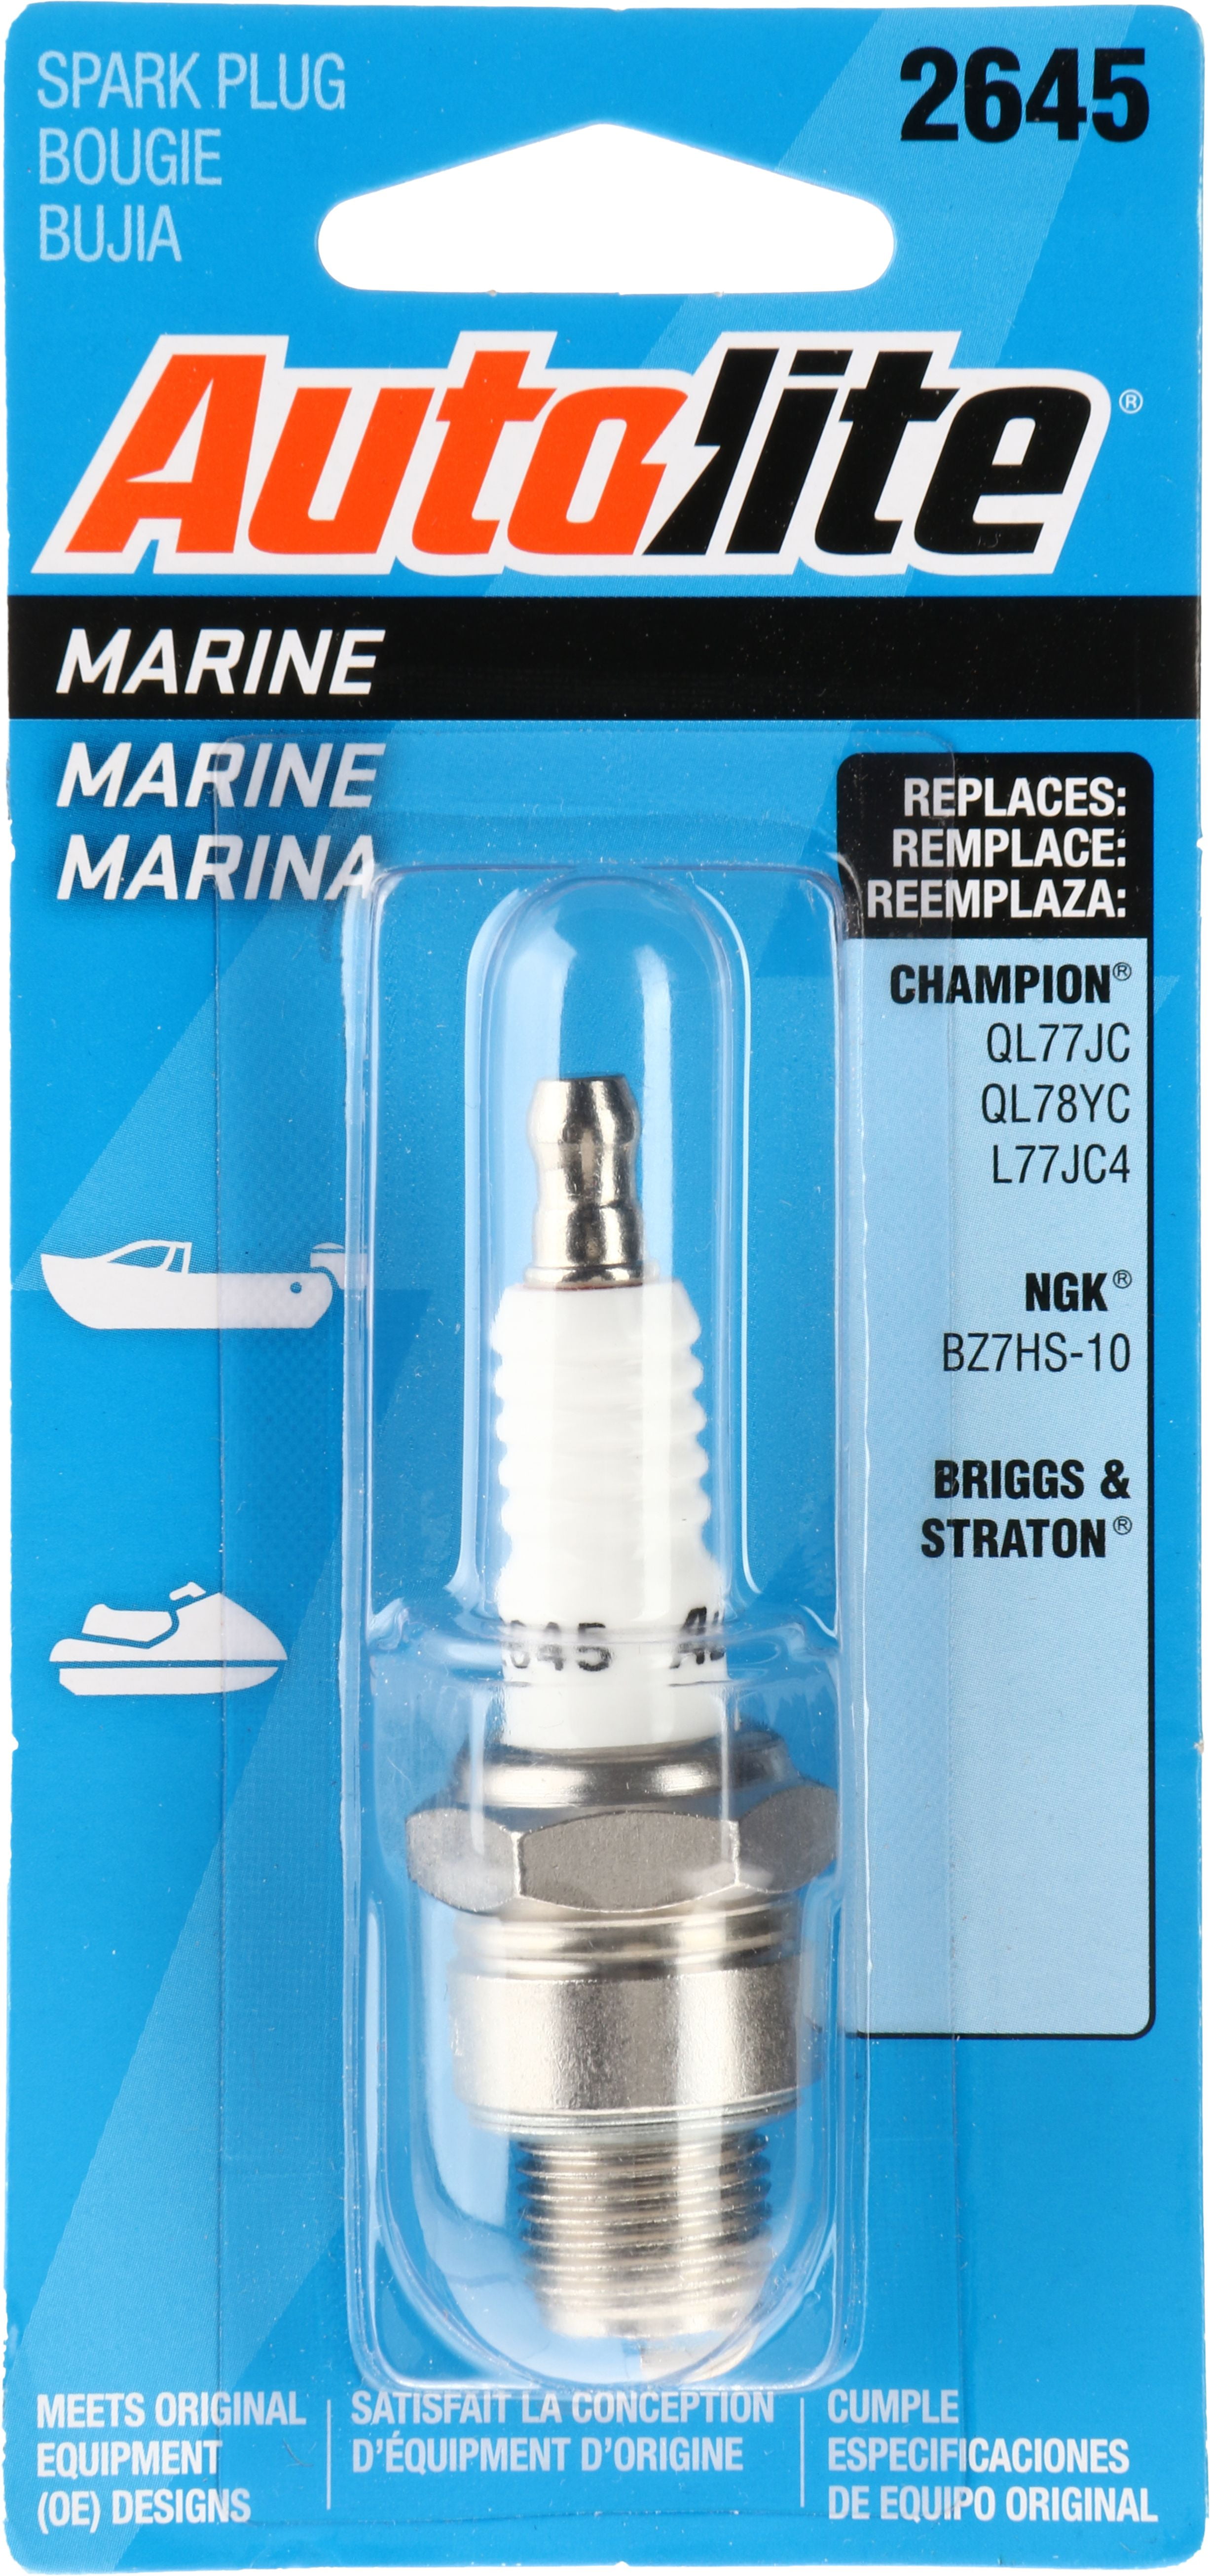 Autolite Marine Spark Plug, 2645 for Select Evinrude, Johnson, Mariner, Mercury Marine and Outboard Motors